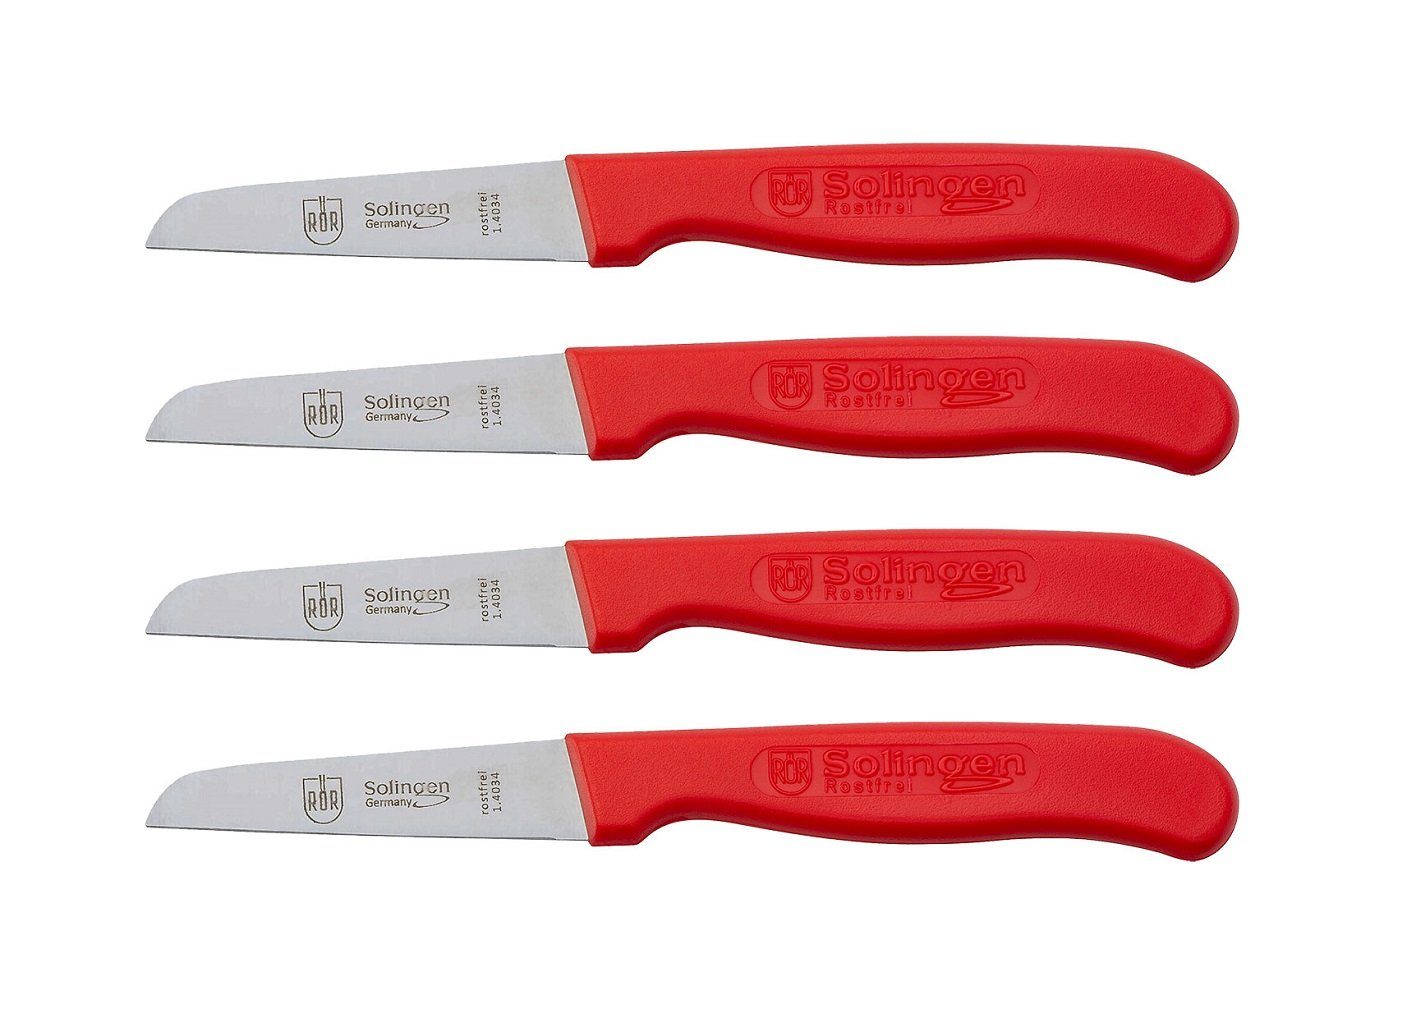 RÖR Messer-Set 10121, gerade, Stahl - - rot rostfreier hochwertiger, Küchenmesser 4-teilig, Solingen in Made